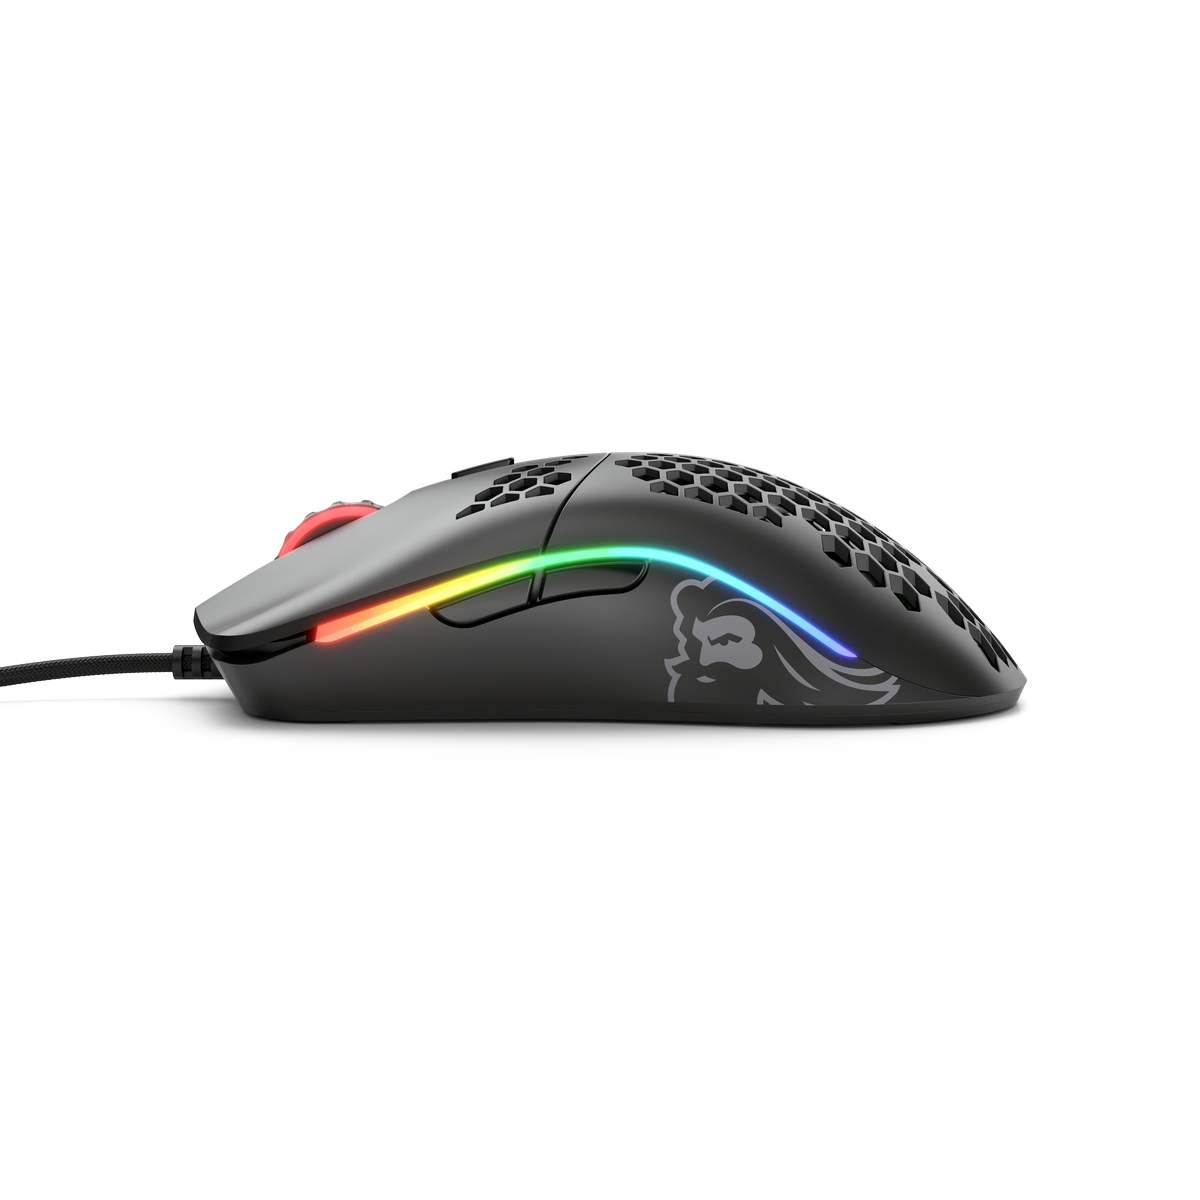 Glorious - Glorious Model O USB RGB Odin Gaming Mouse - Matte Black (GO-BLACK)